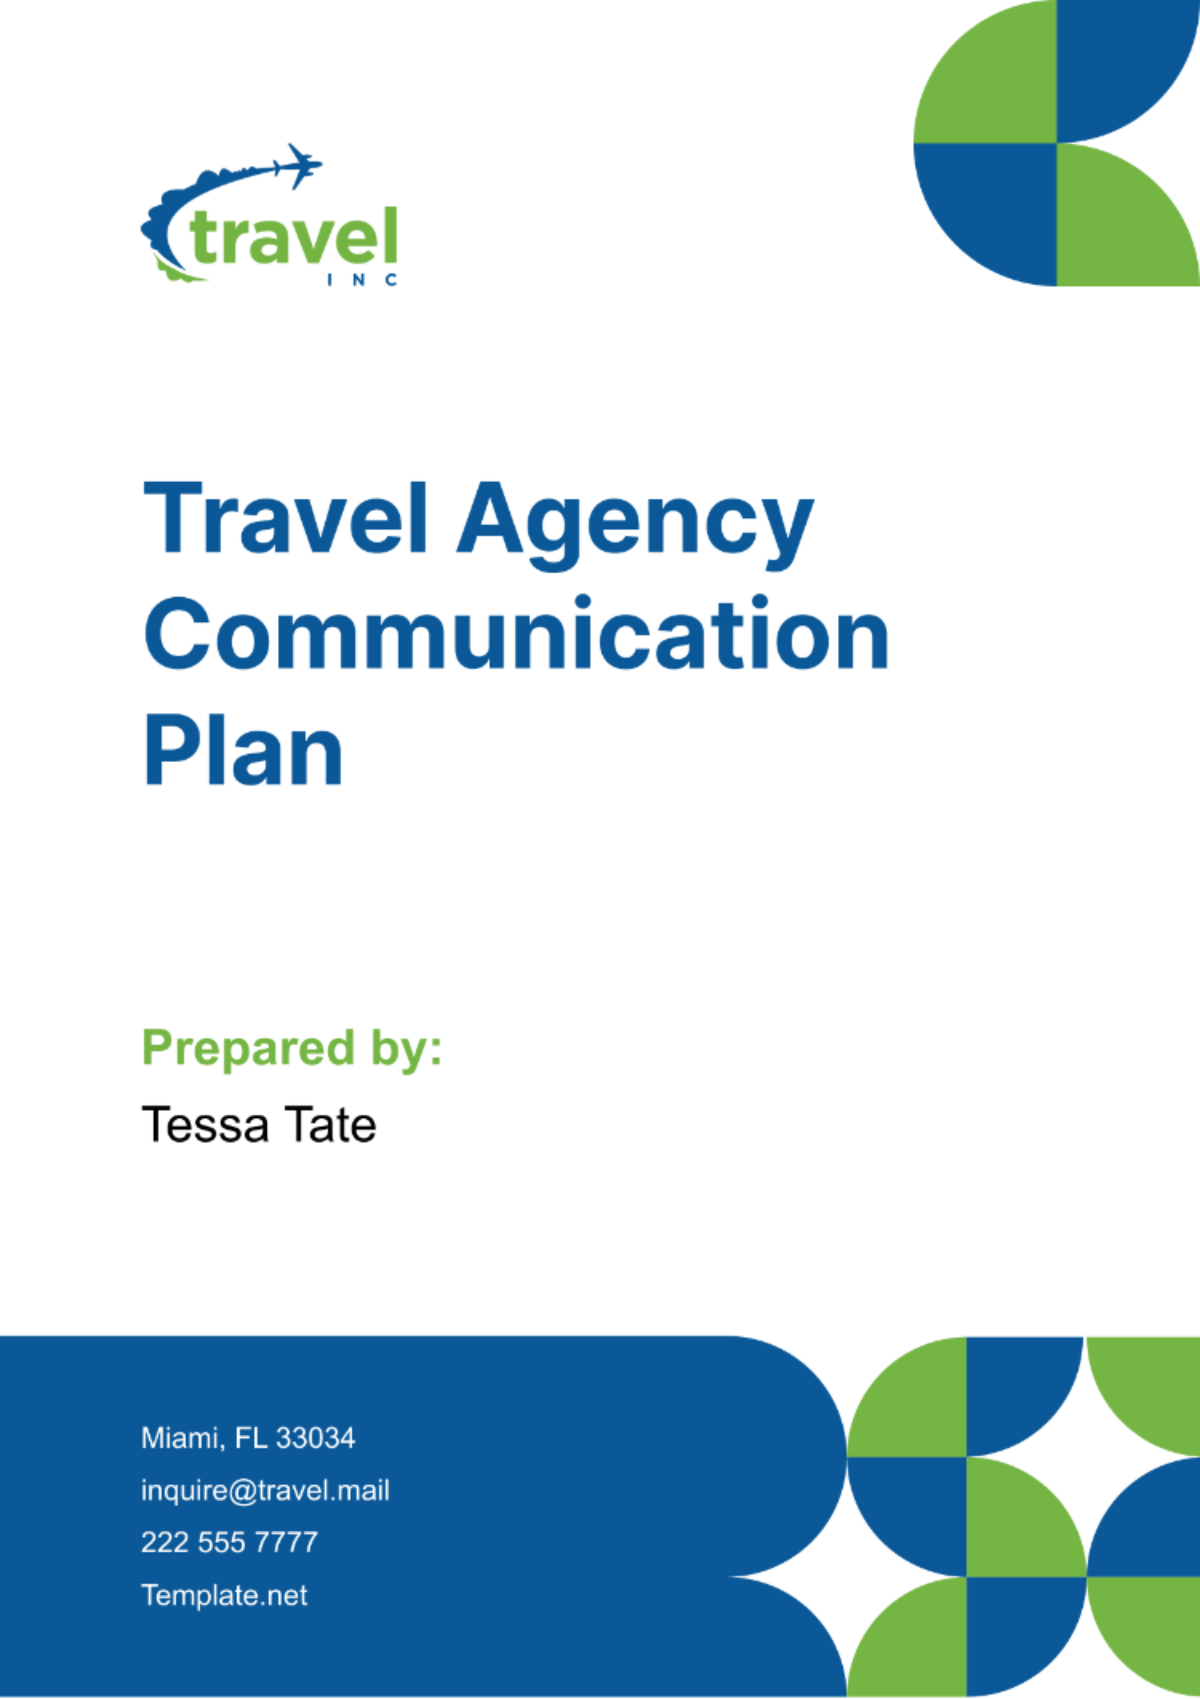 Travel Agency Communication Plan Template